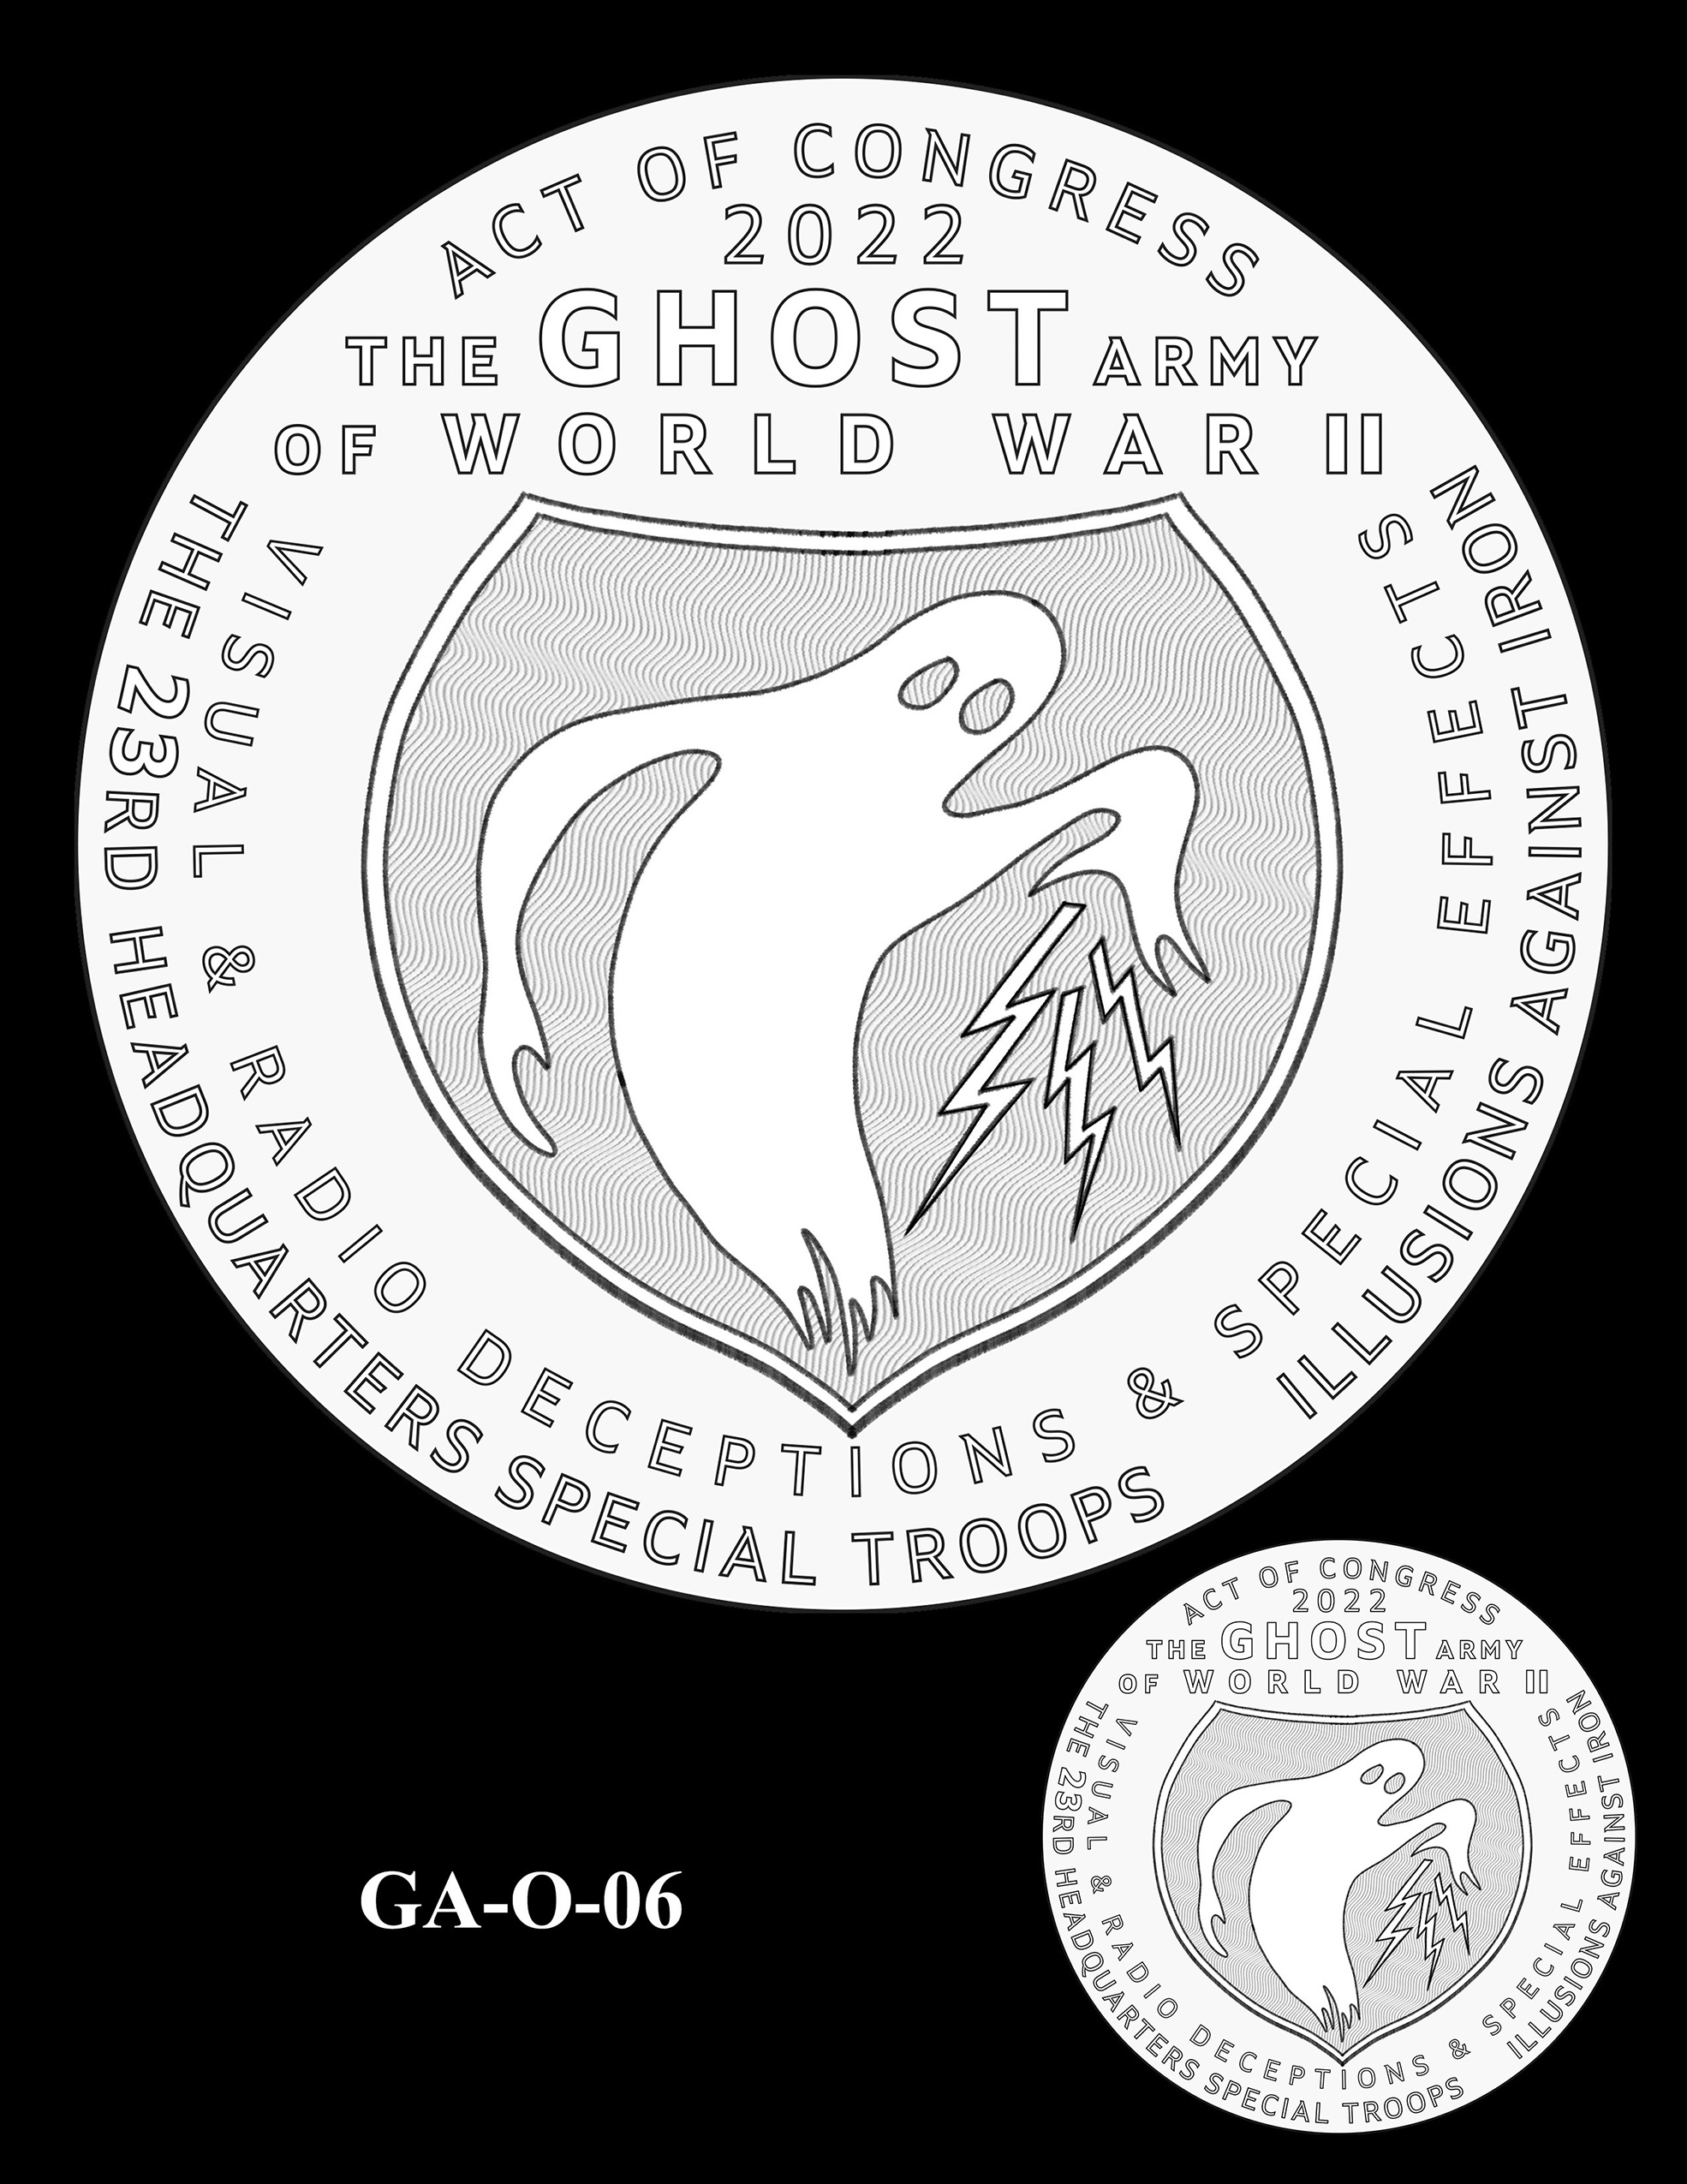 GA-O-06 -- Ghost Army Congressional Gold Medal